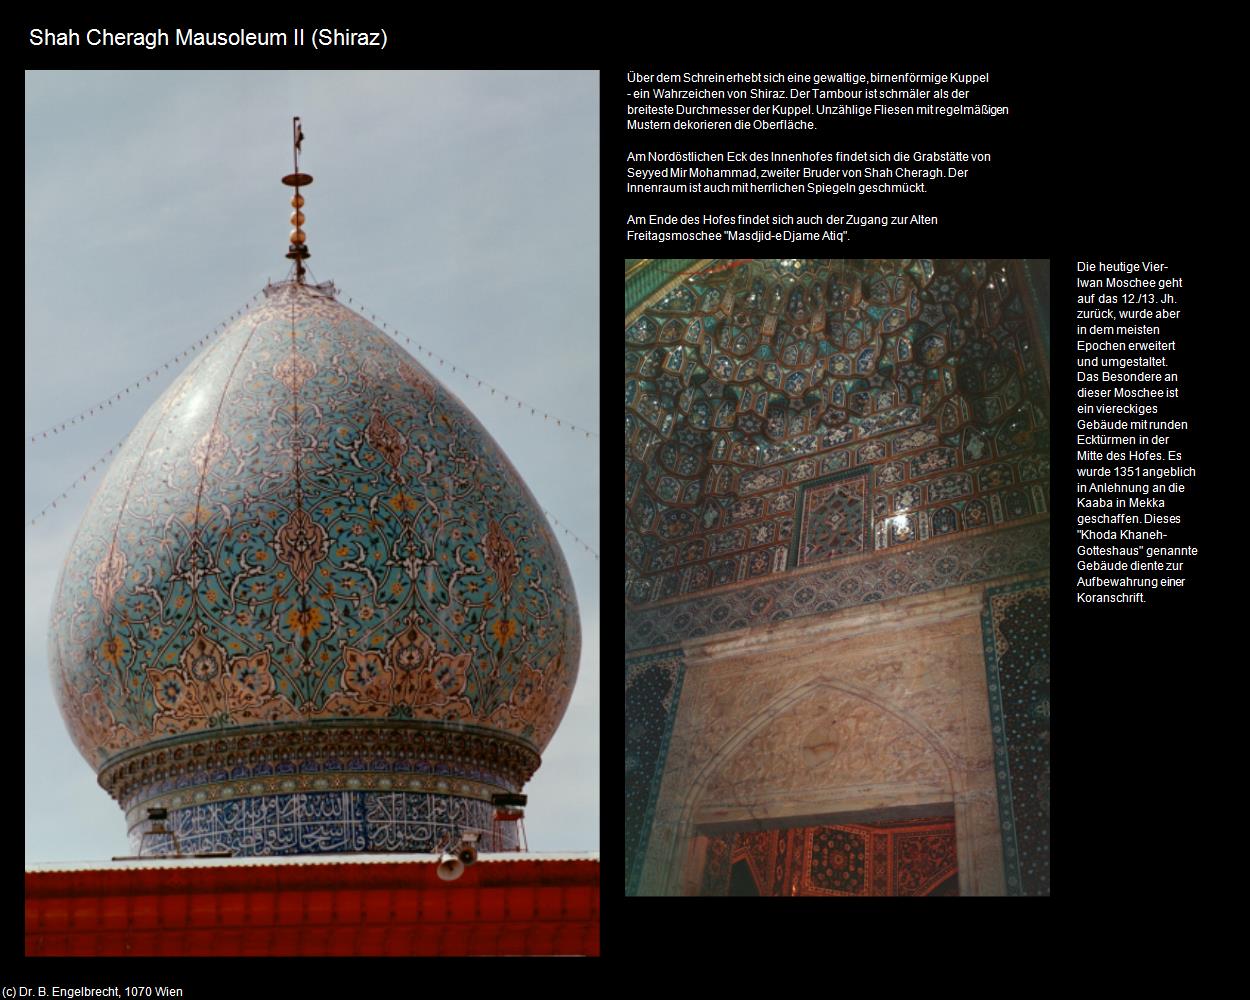 Shah Cheragh Mausoleum II (Shiraz) in Iran